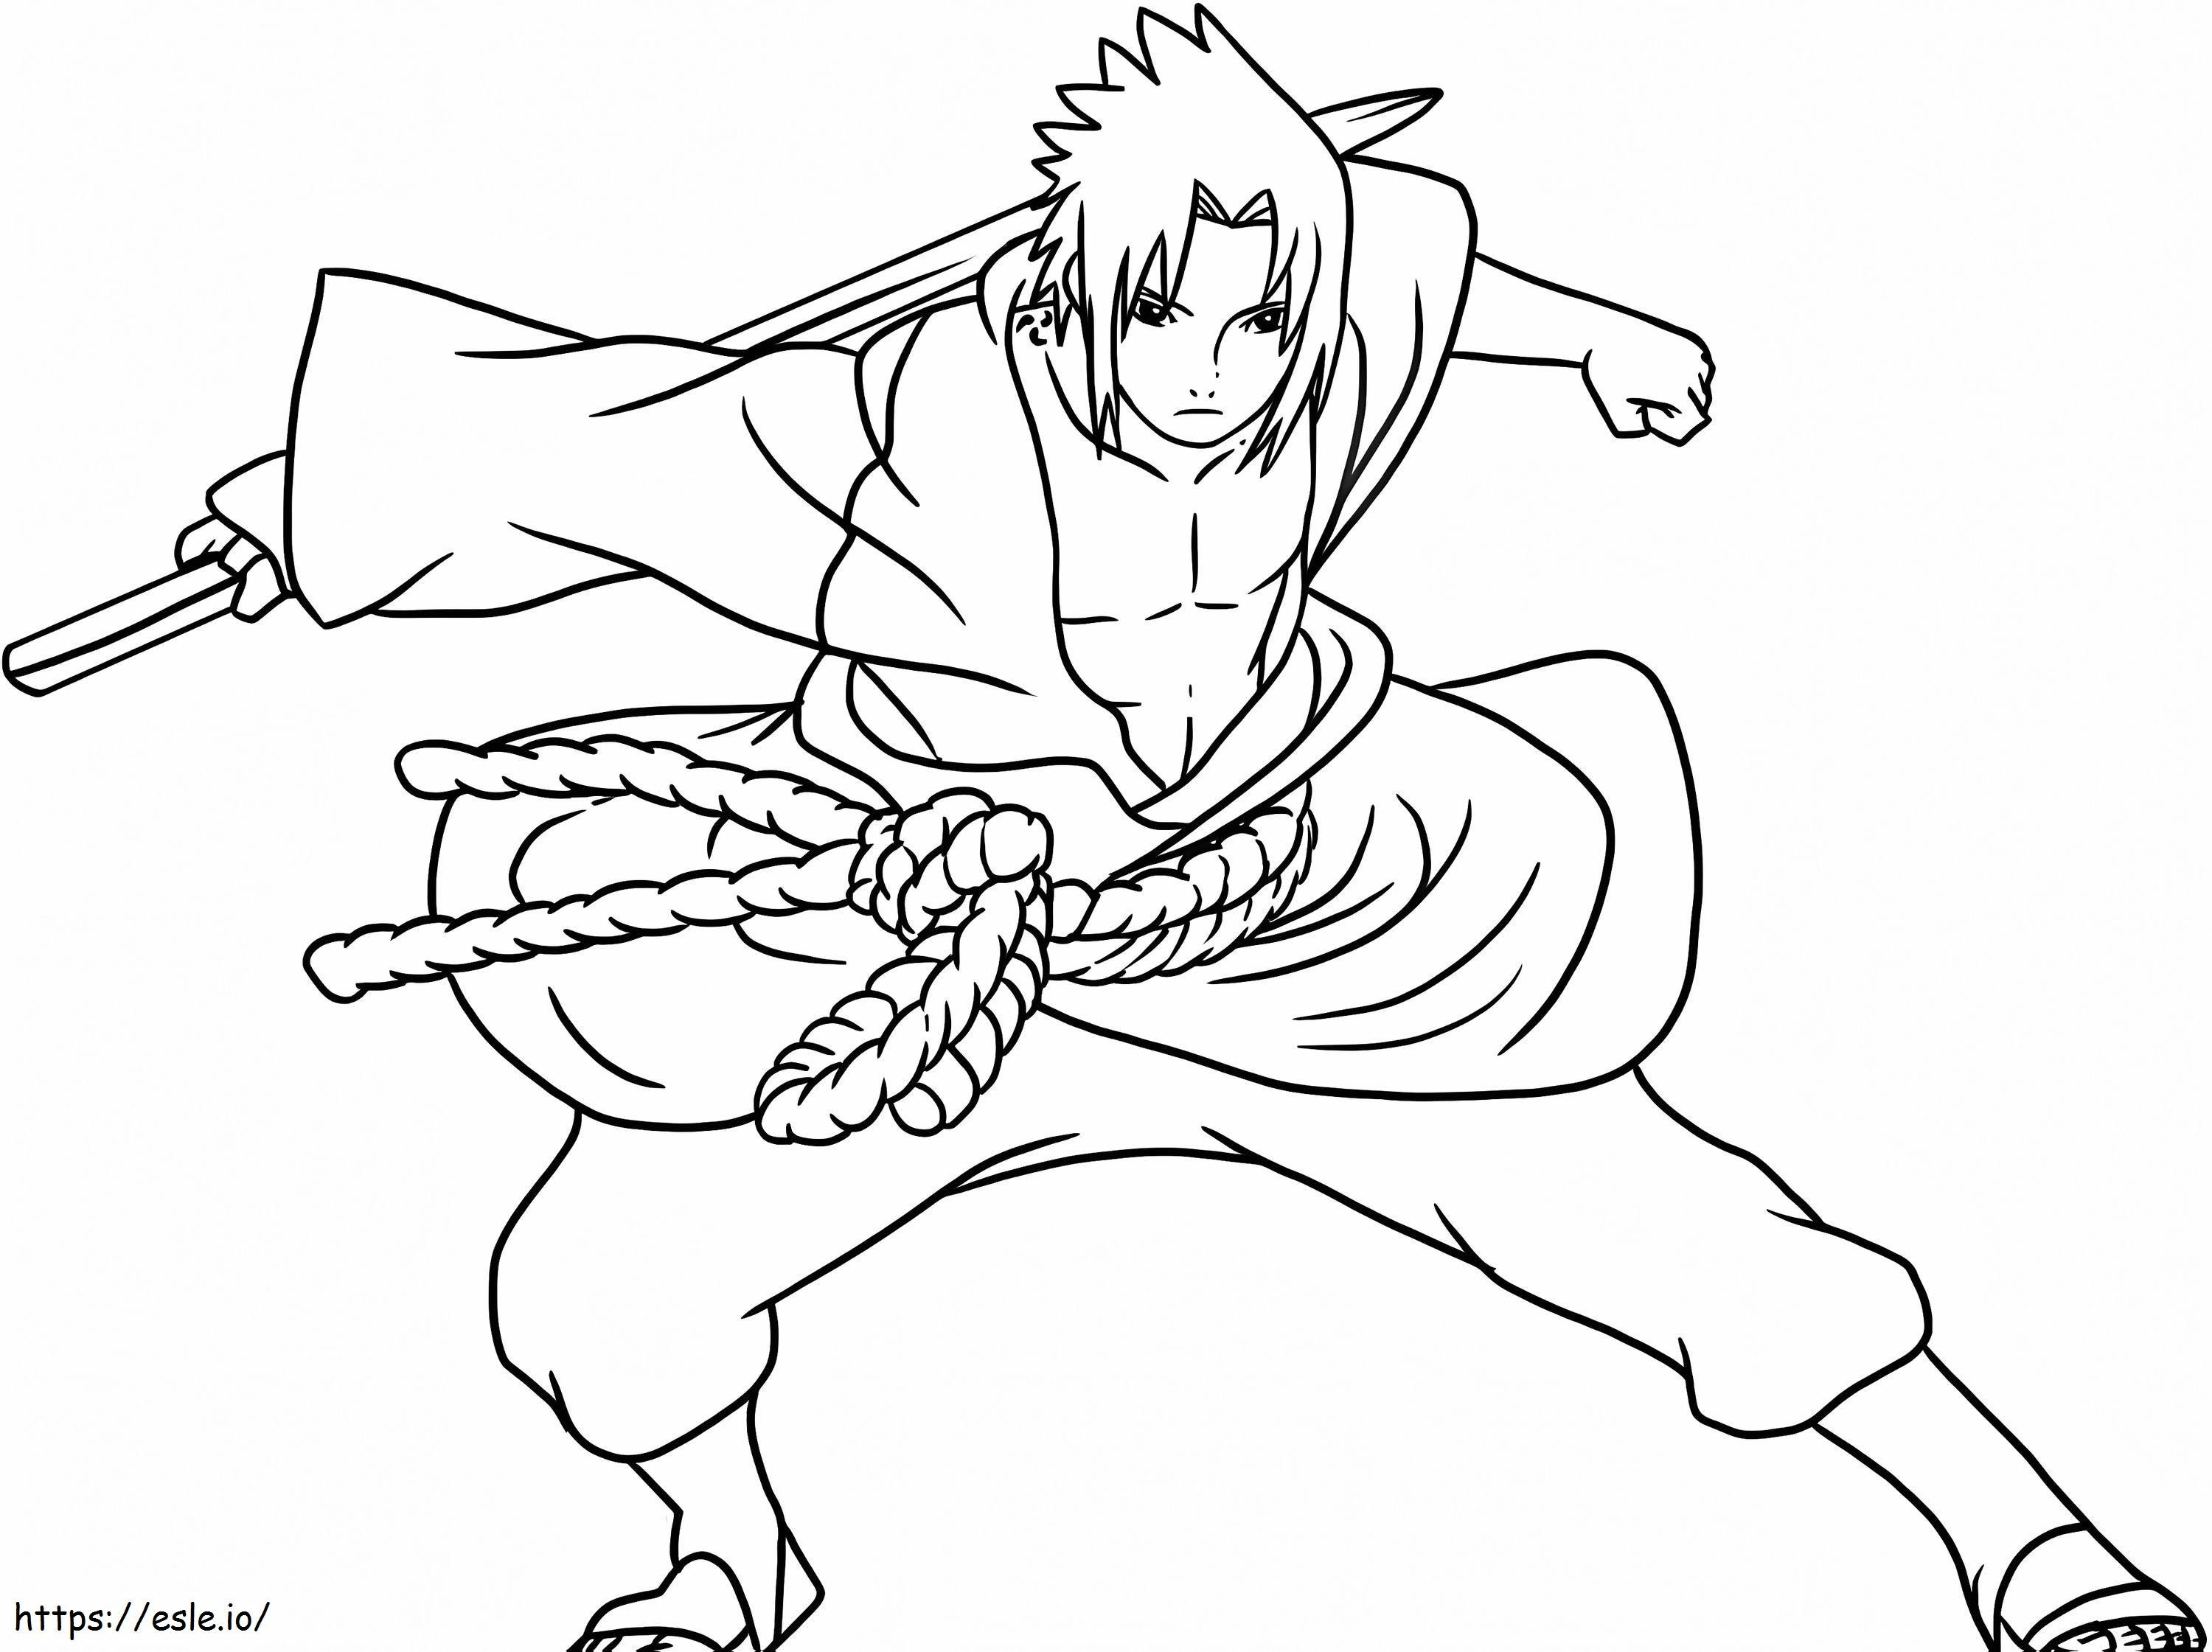 Sasuke En Action coloring page